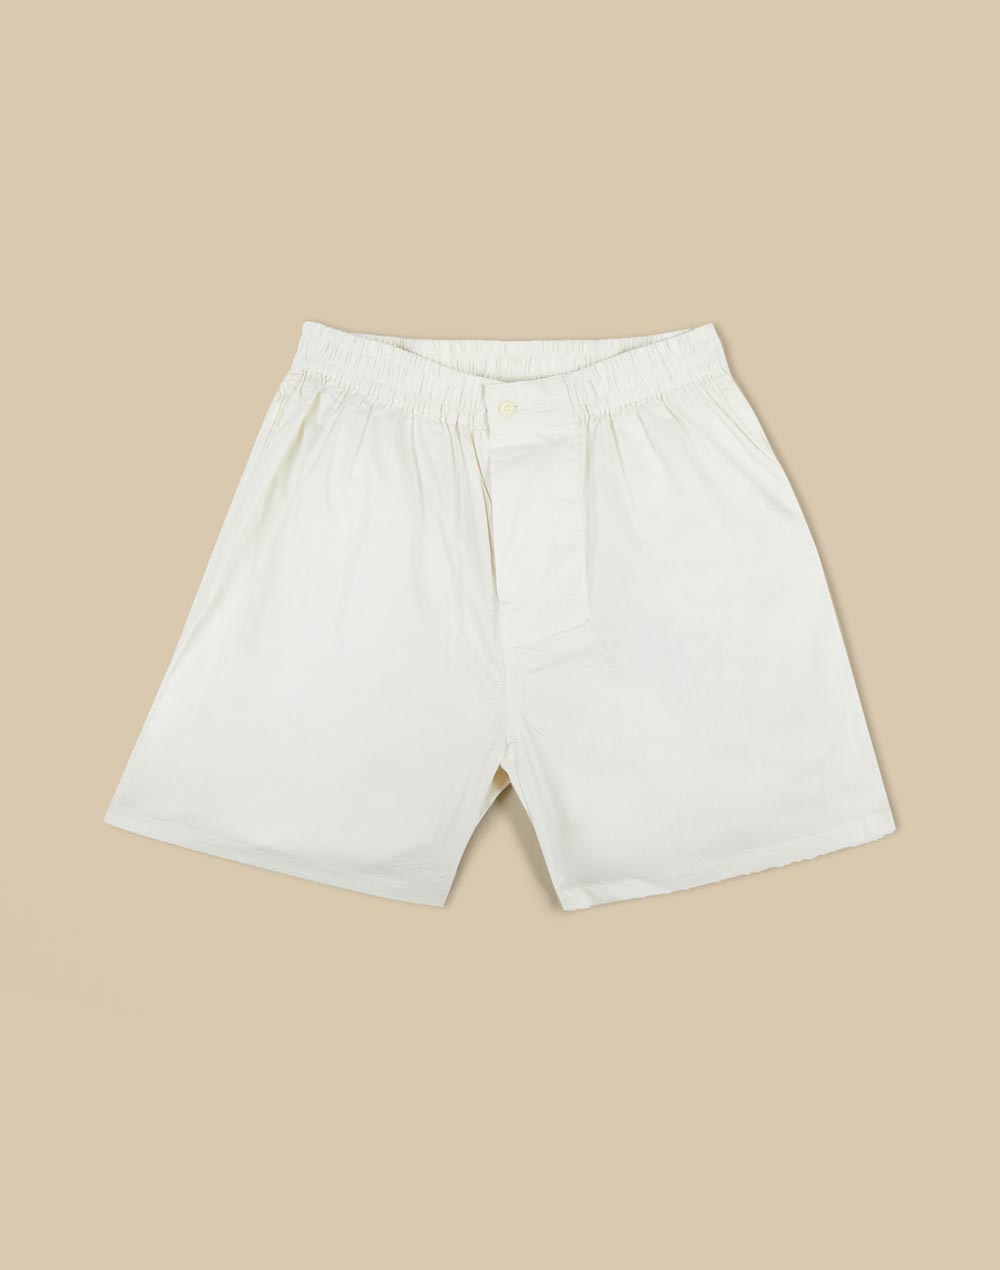 Buy Shorts for Men, Cotton Shorts for Men Online at Fabindia